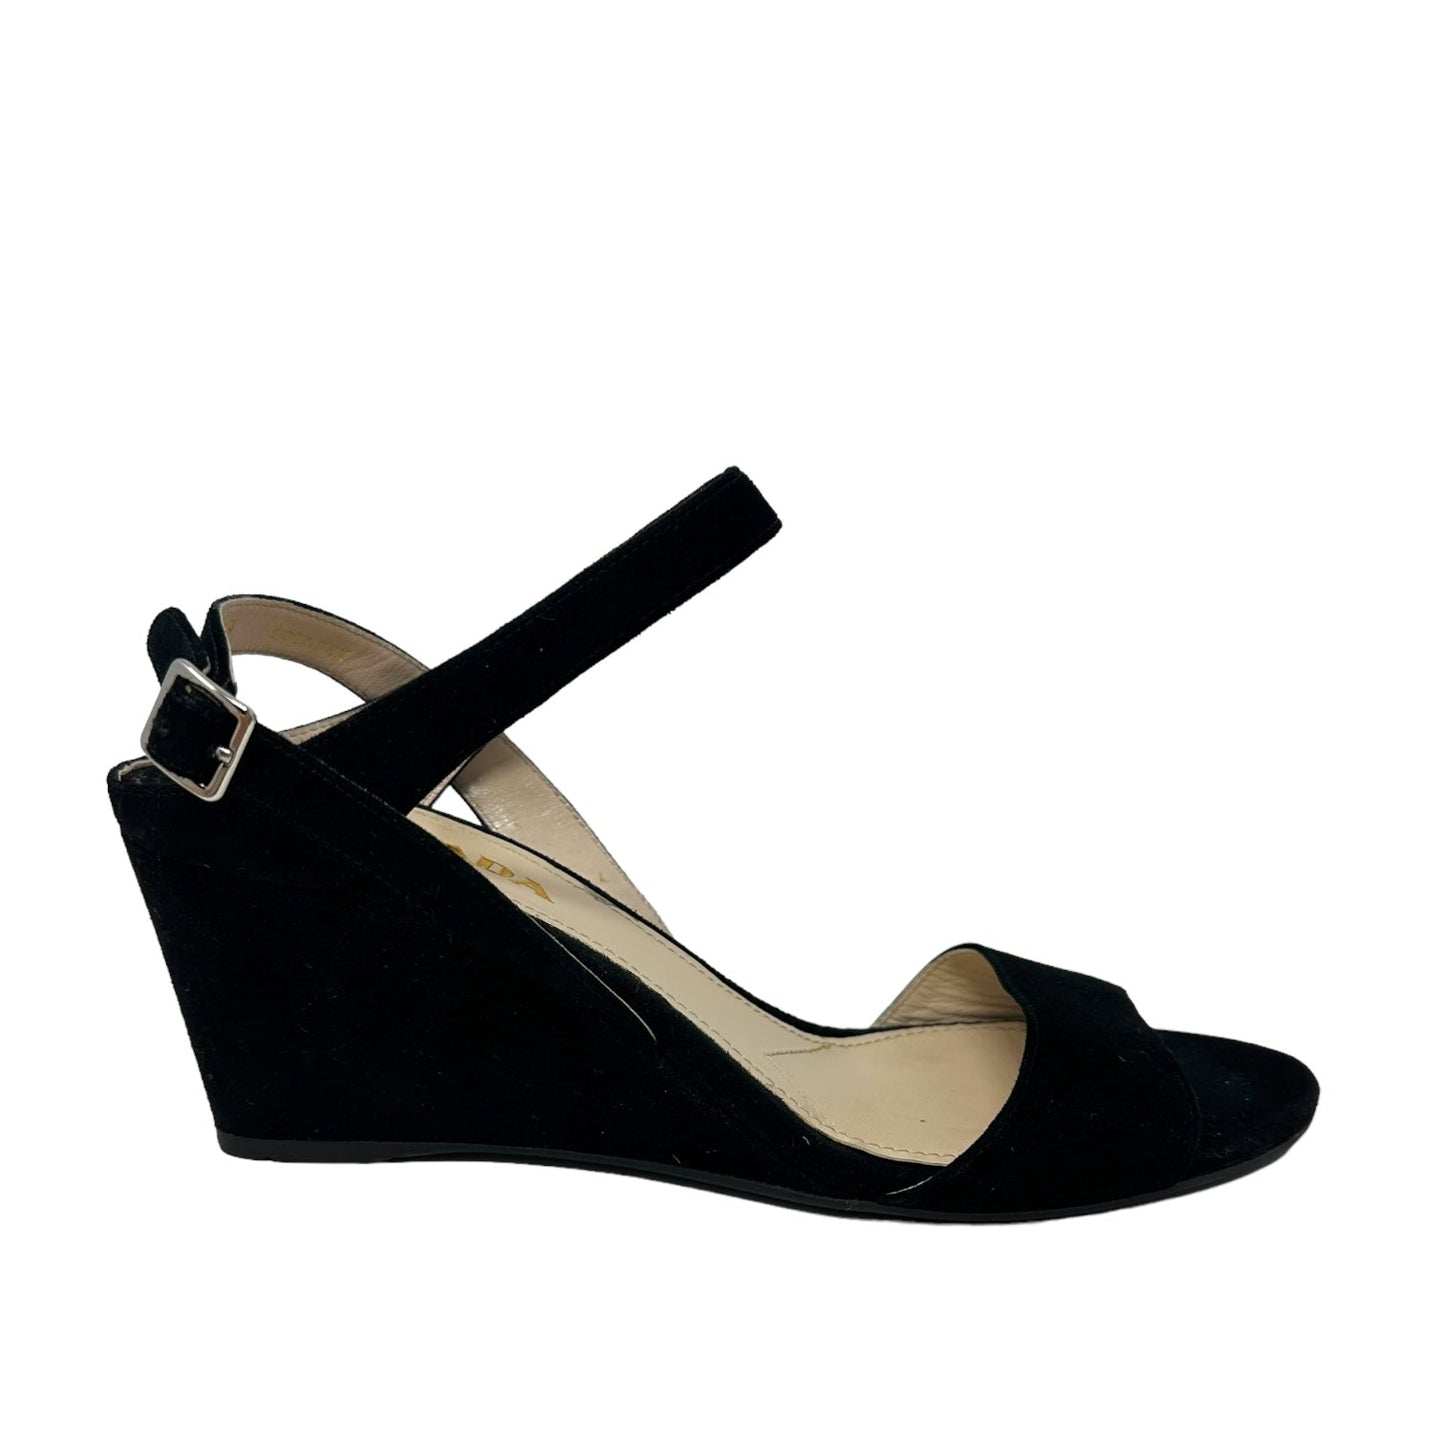 Calzature Donna Suede Wedge Sandal, Nero - Camoscio Luxury Designer By Prada  Size: 9